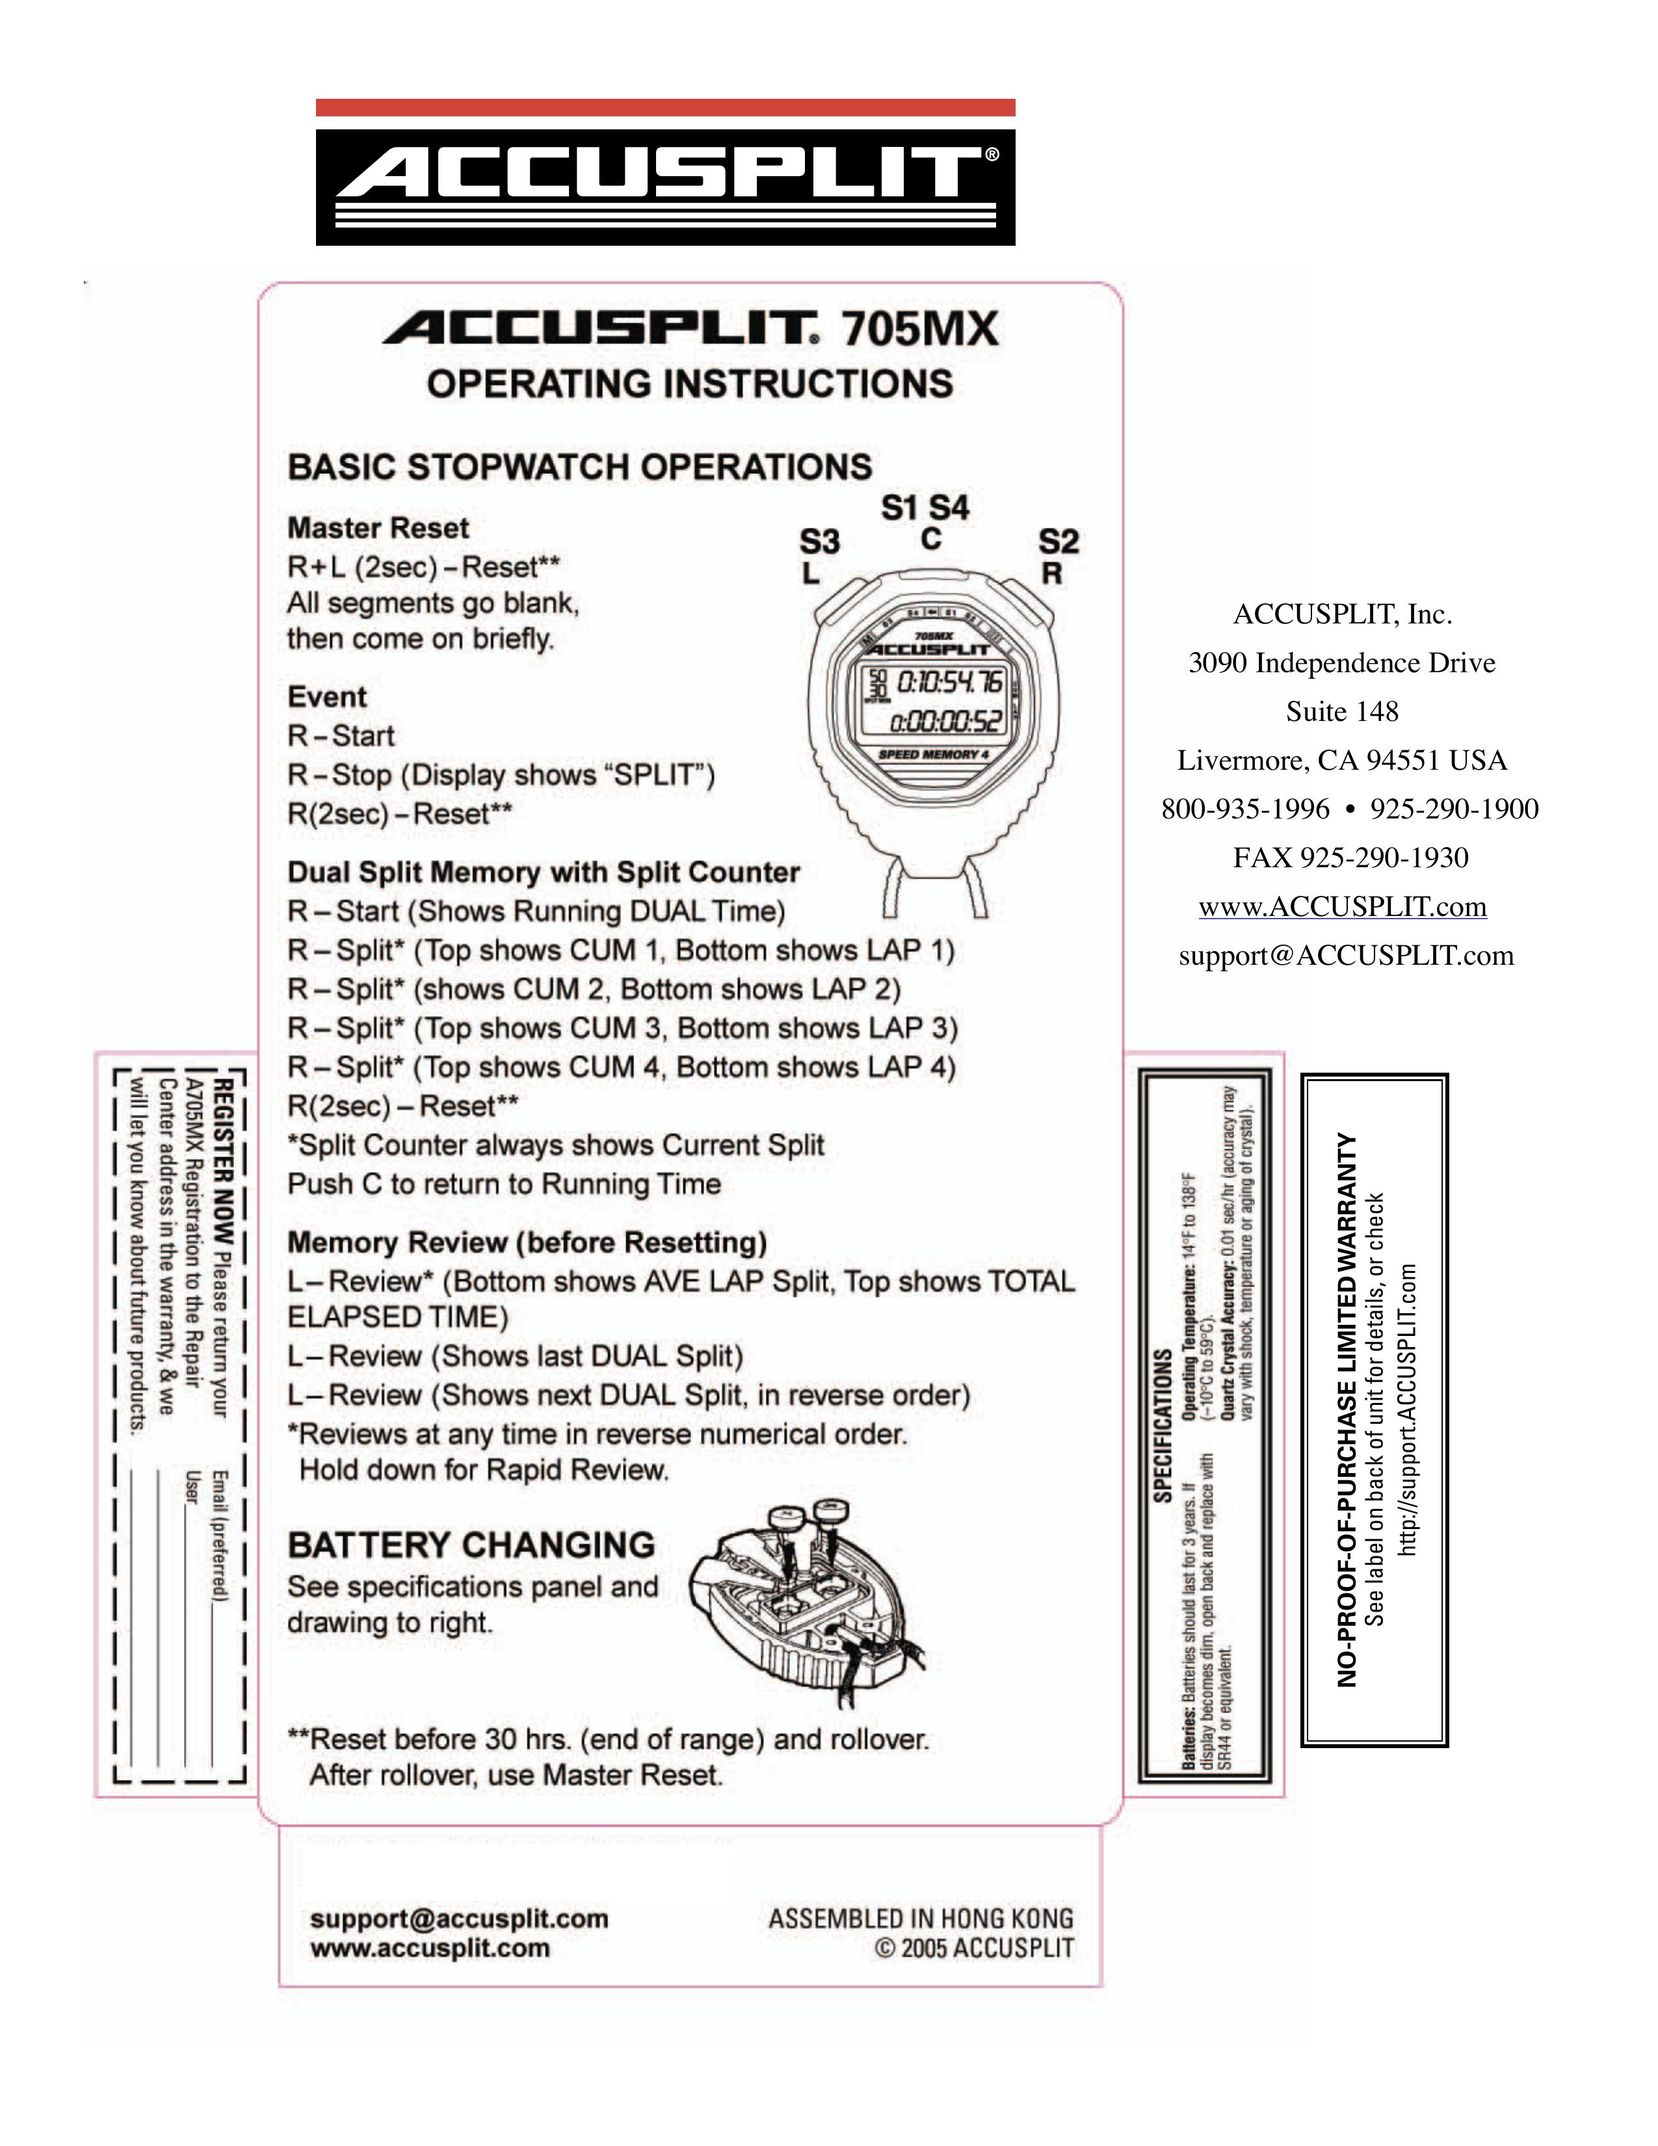 Accusplit A705MX Watch User Manual